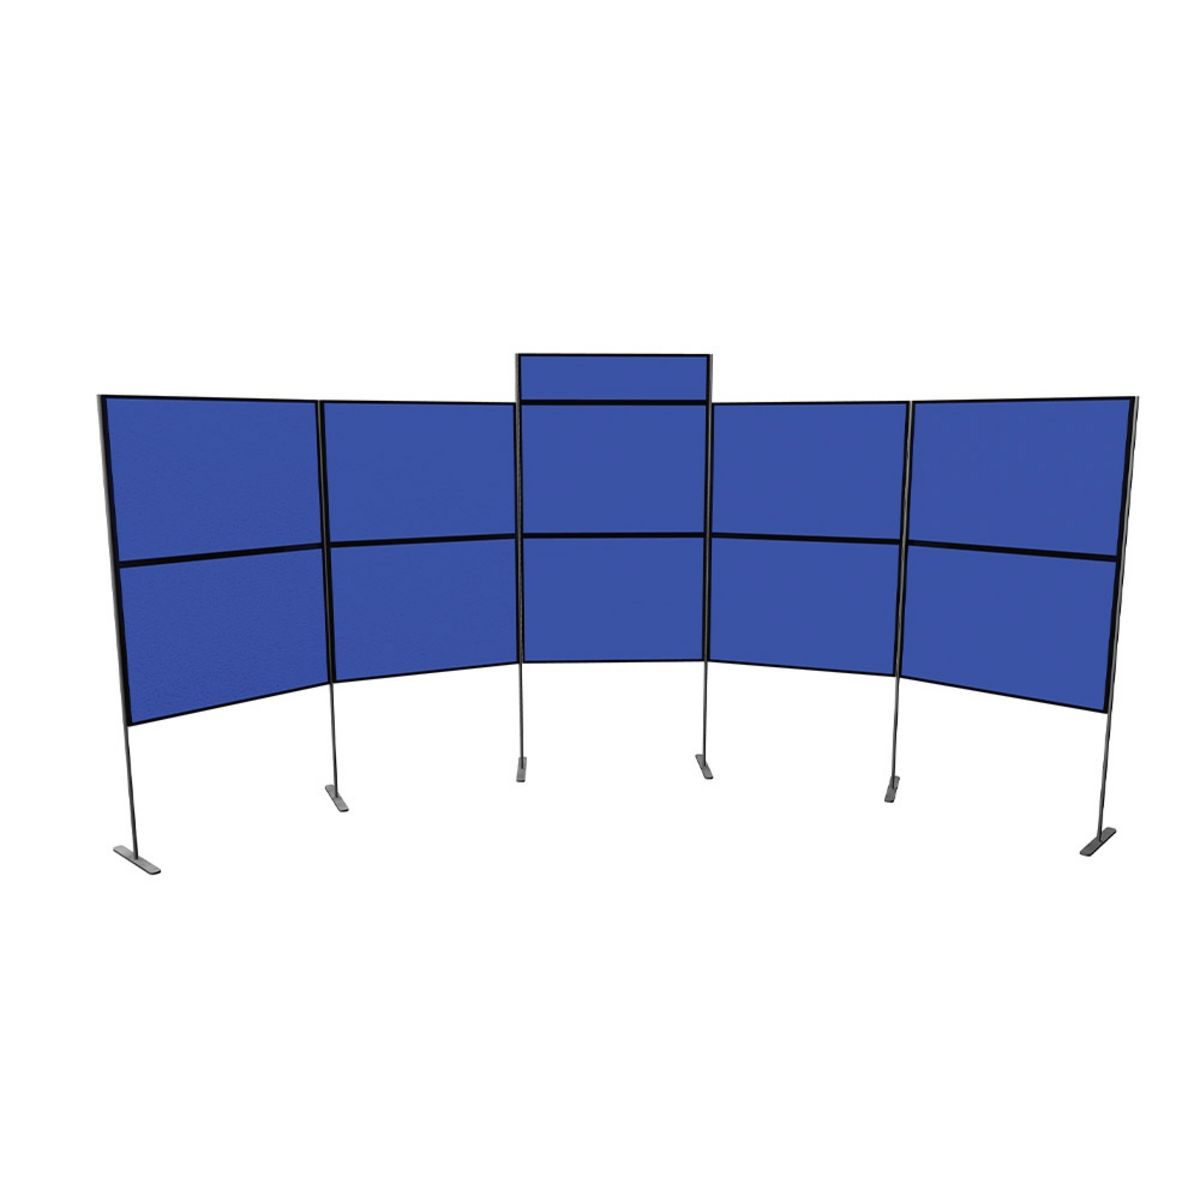 baseline-panel-and-pole-kits-2-third-76974.jpg